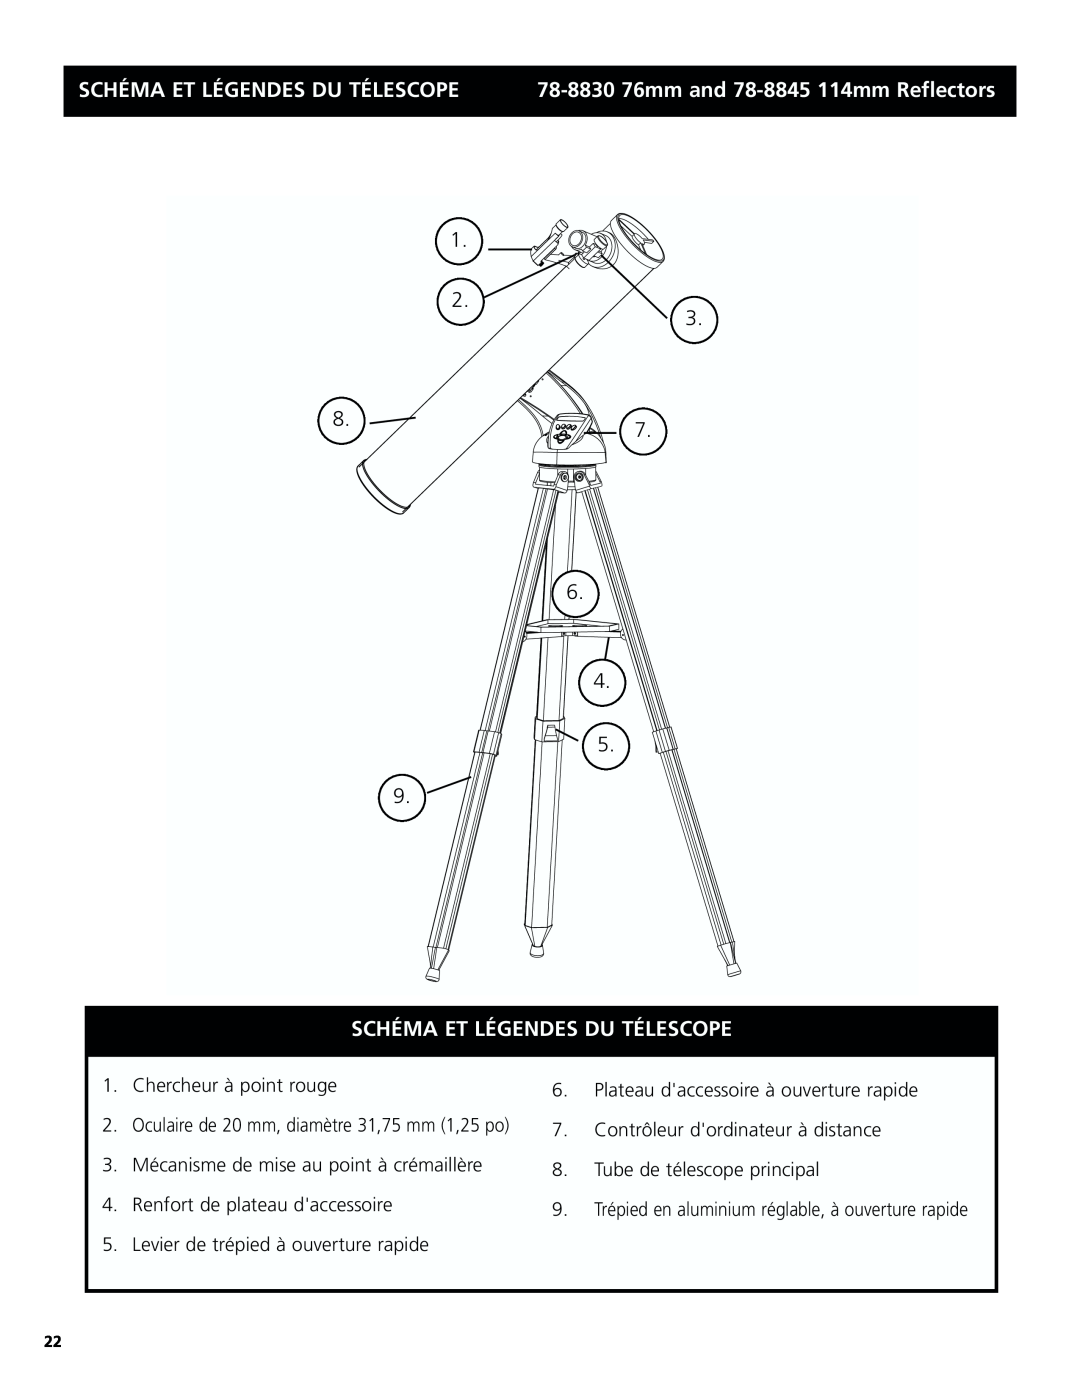 Bushnell 78-8831, 78-8846 instruction manual Schéma Et Légendes Du Télescope, 78-883076mm and 78-8845114mm Reflectors 